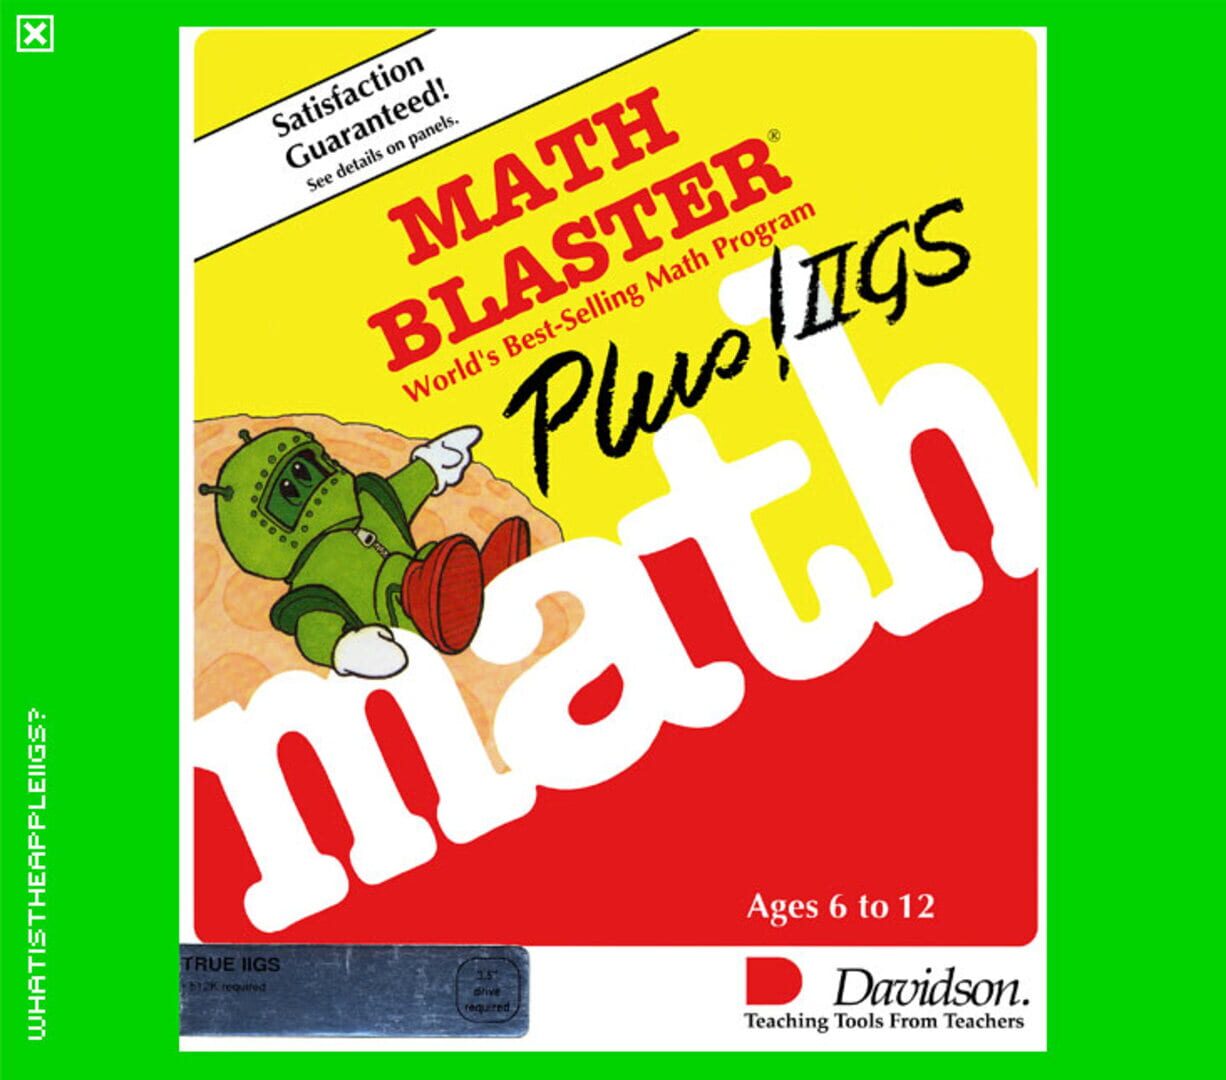 Math Blaster Plus! featured image